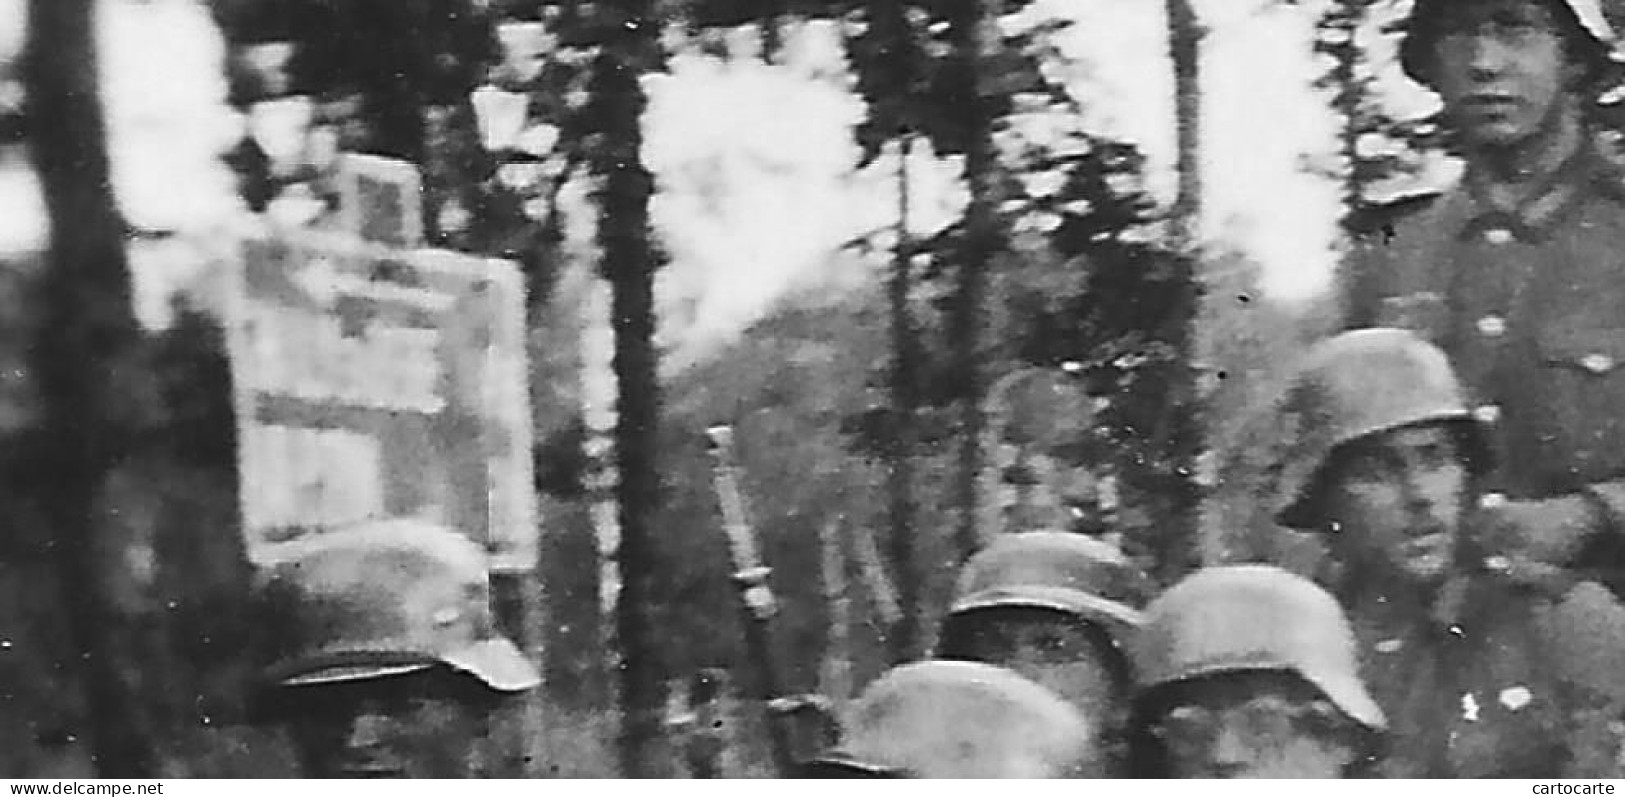 MIL 482  0424 WW2 WK2  CAMPAGNE DE FRANCE 08 ARDENNES A SITUER   SOLDATS ALLEMANDS  1940 - War, Military